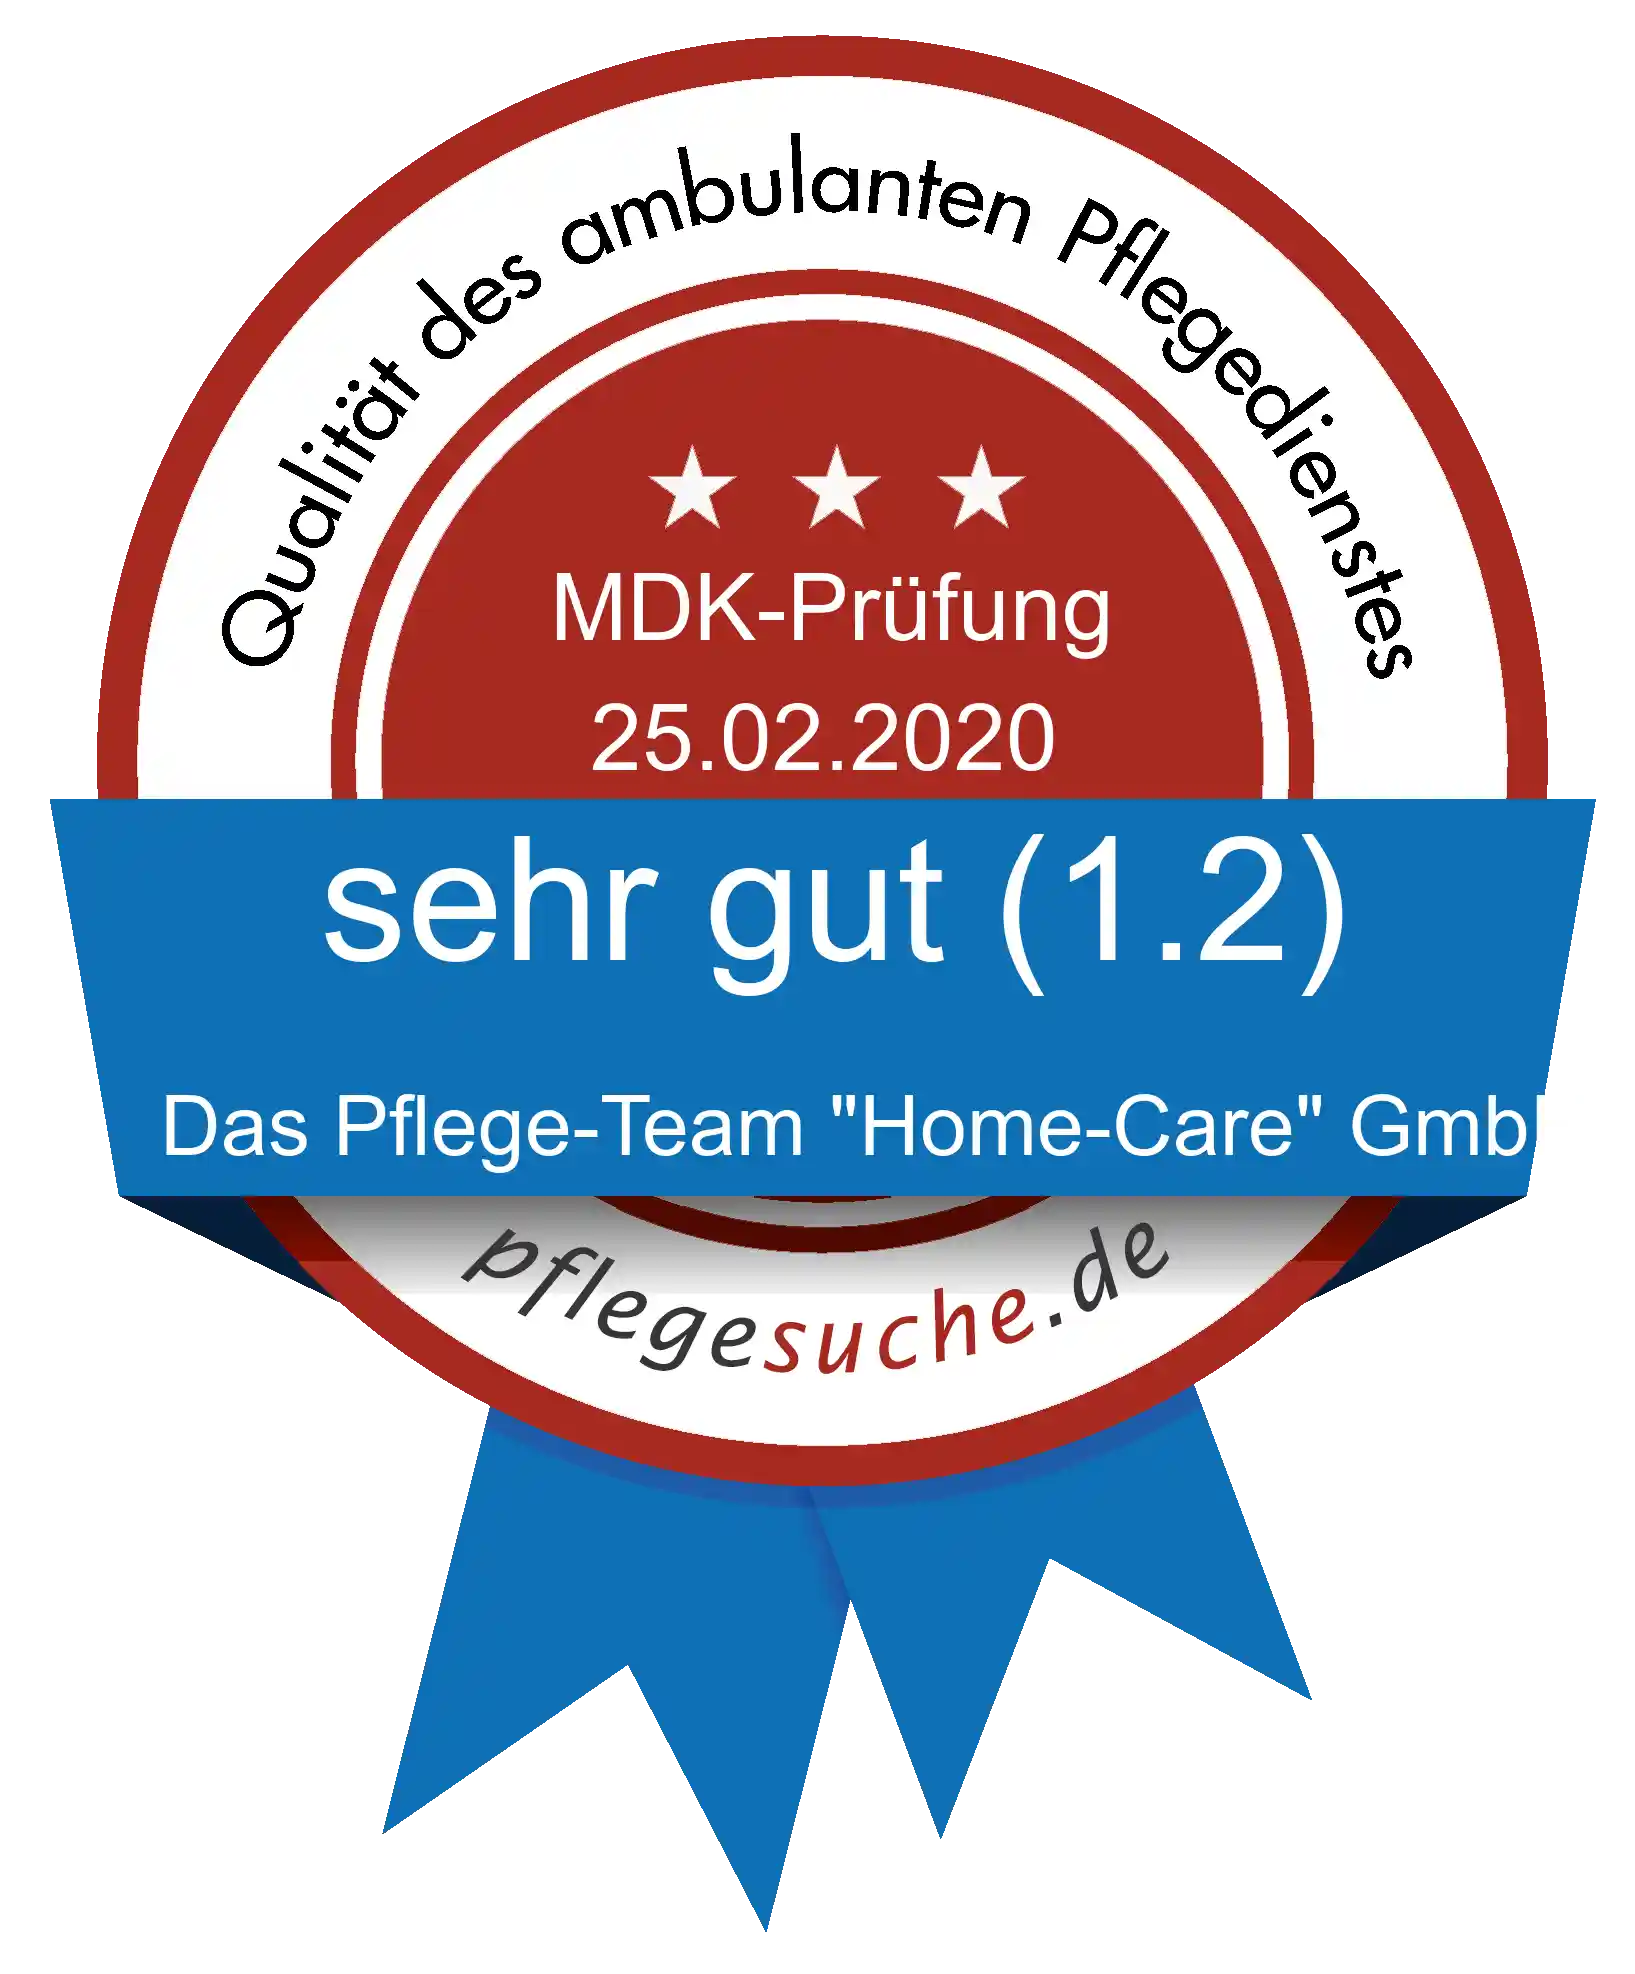 Siegel Benotung: Das Pflege-Team "Home-Care" GmbH